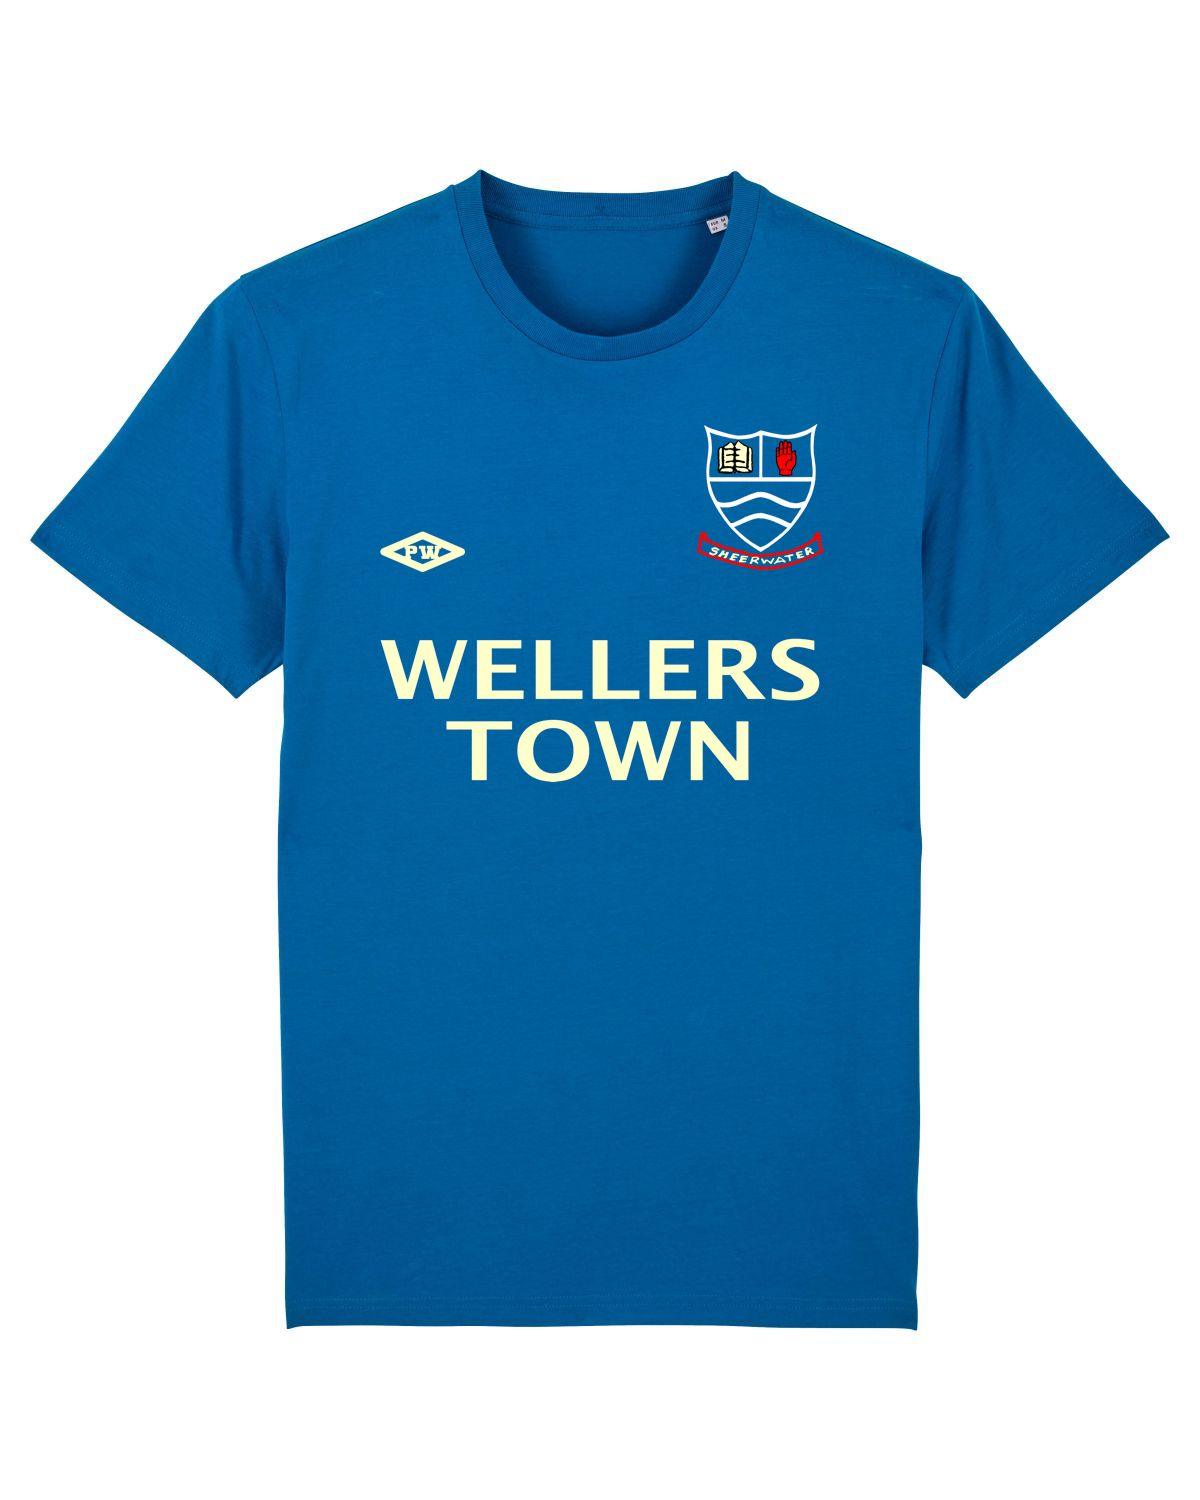 WELLERS TOWN: T-Shirt Inspired by The Jam, Paul Weller, Black Barn Studios